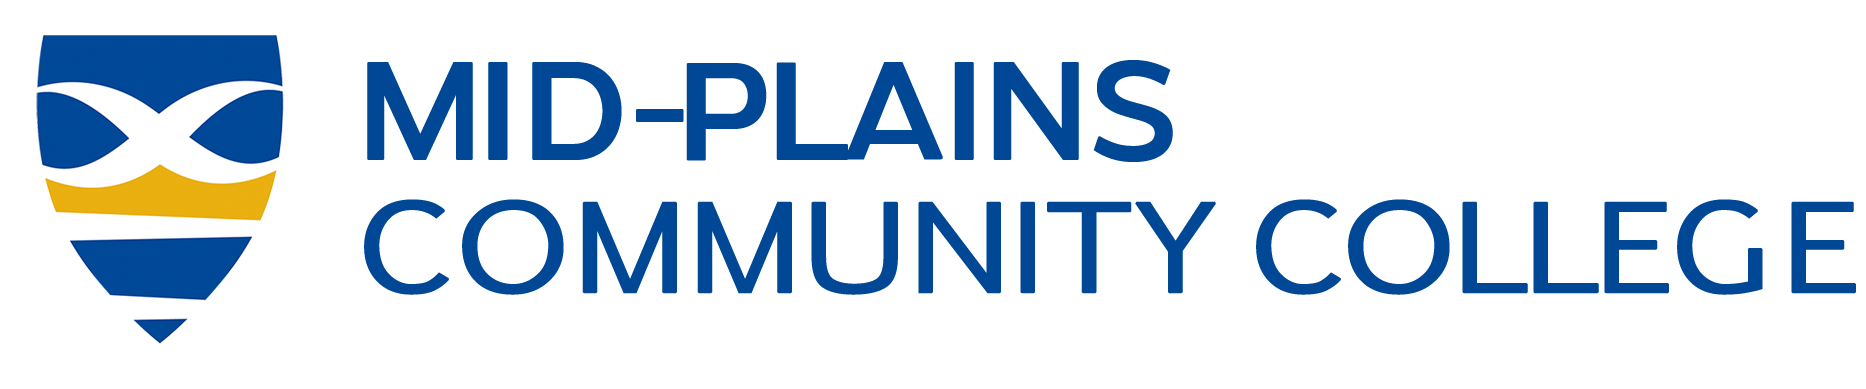 View Mid-Plains Community College information